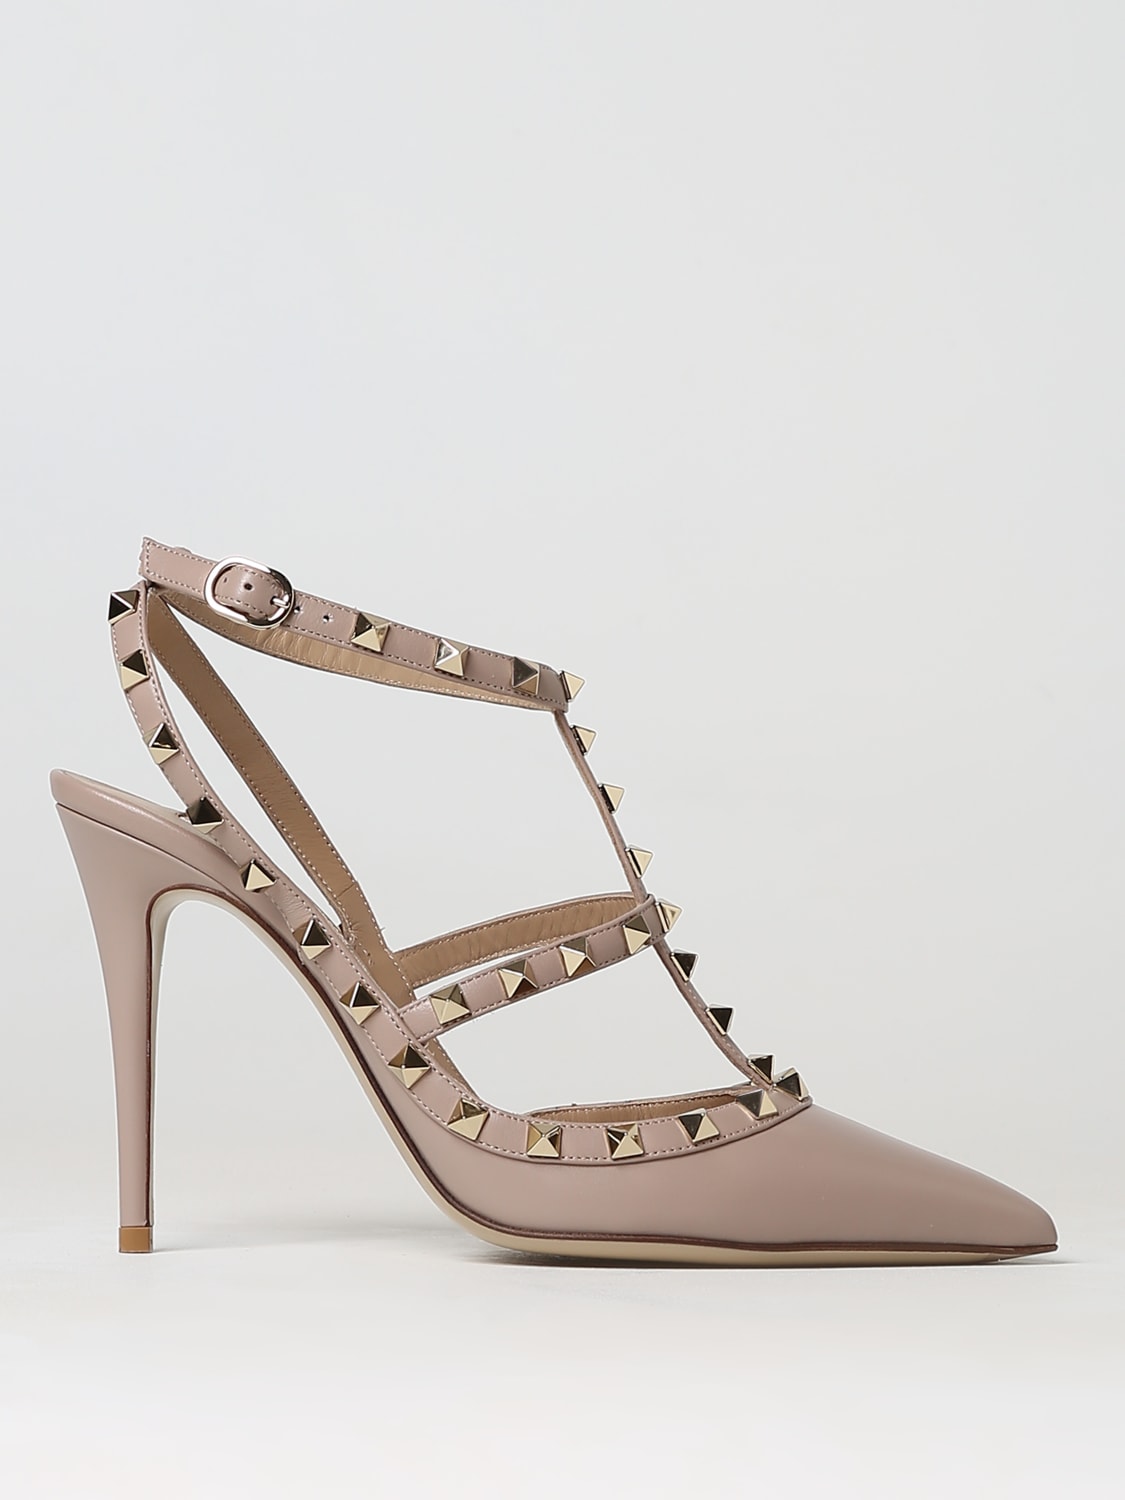 VALENTINO GARAVANI: high heel shoes for woman Blush Pink | Valentino Garavani high heel 3W2S0393VOD online on GIGLIO.COM